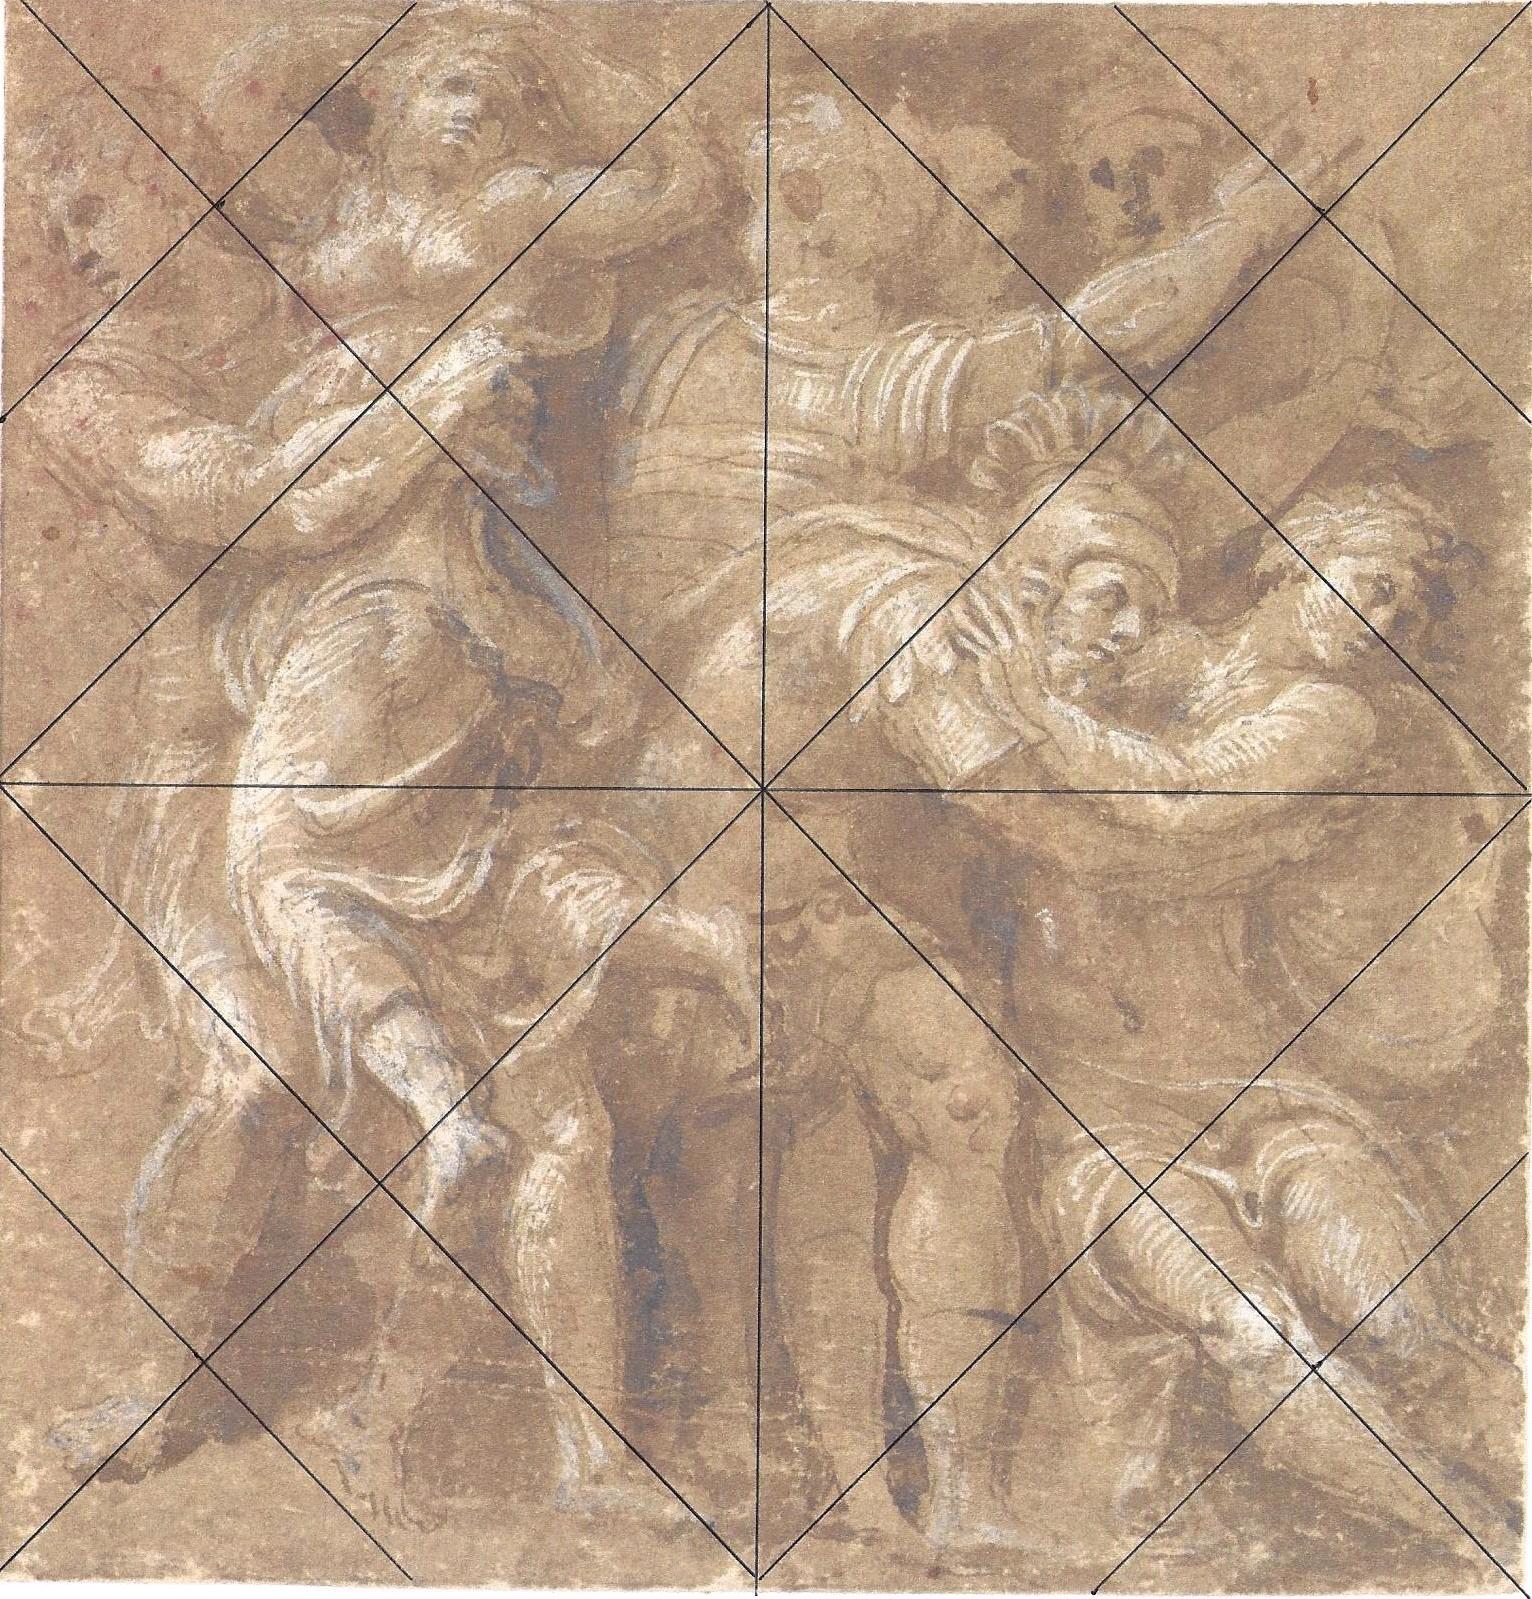 L'enlèvement des Sabines , un dessin de la Renaissance de Biagio Pupini en vente 8